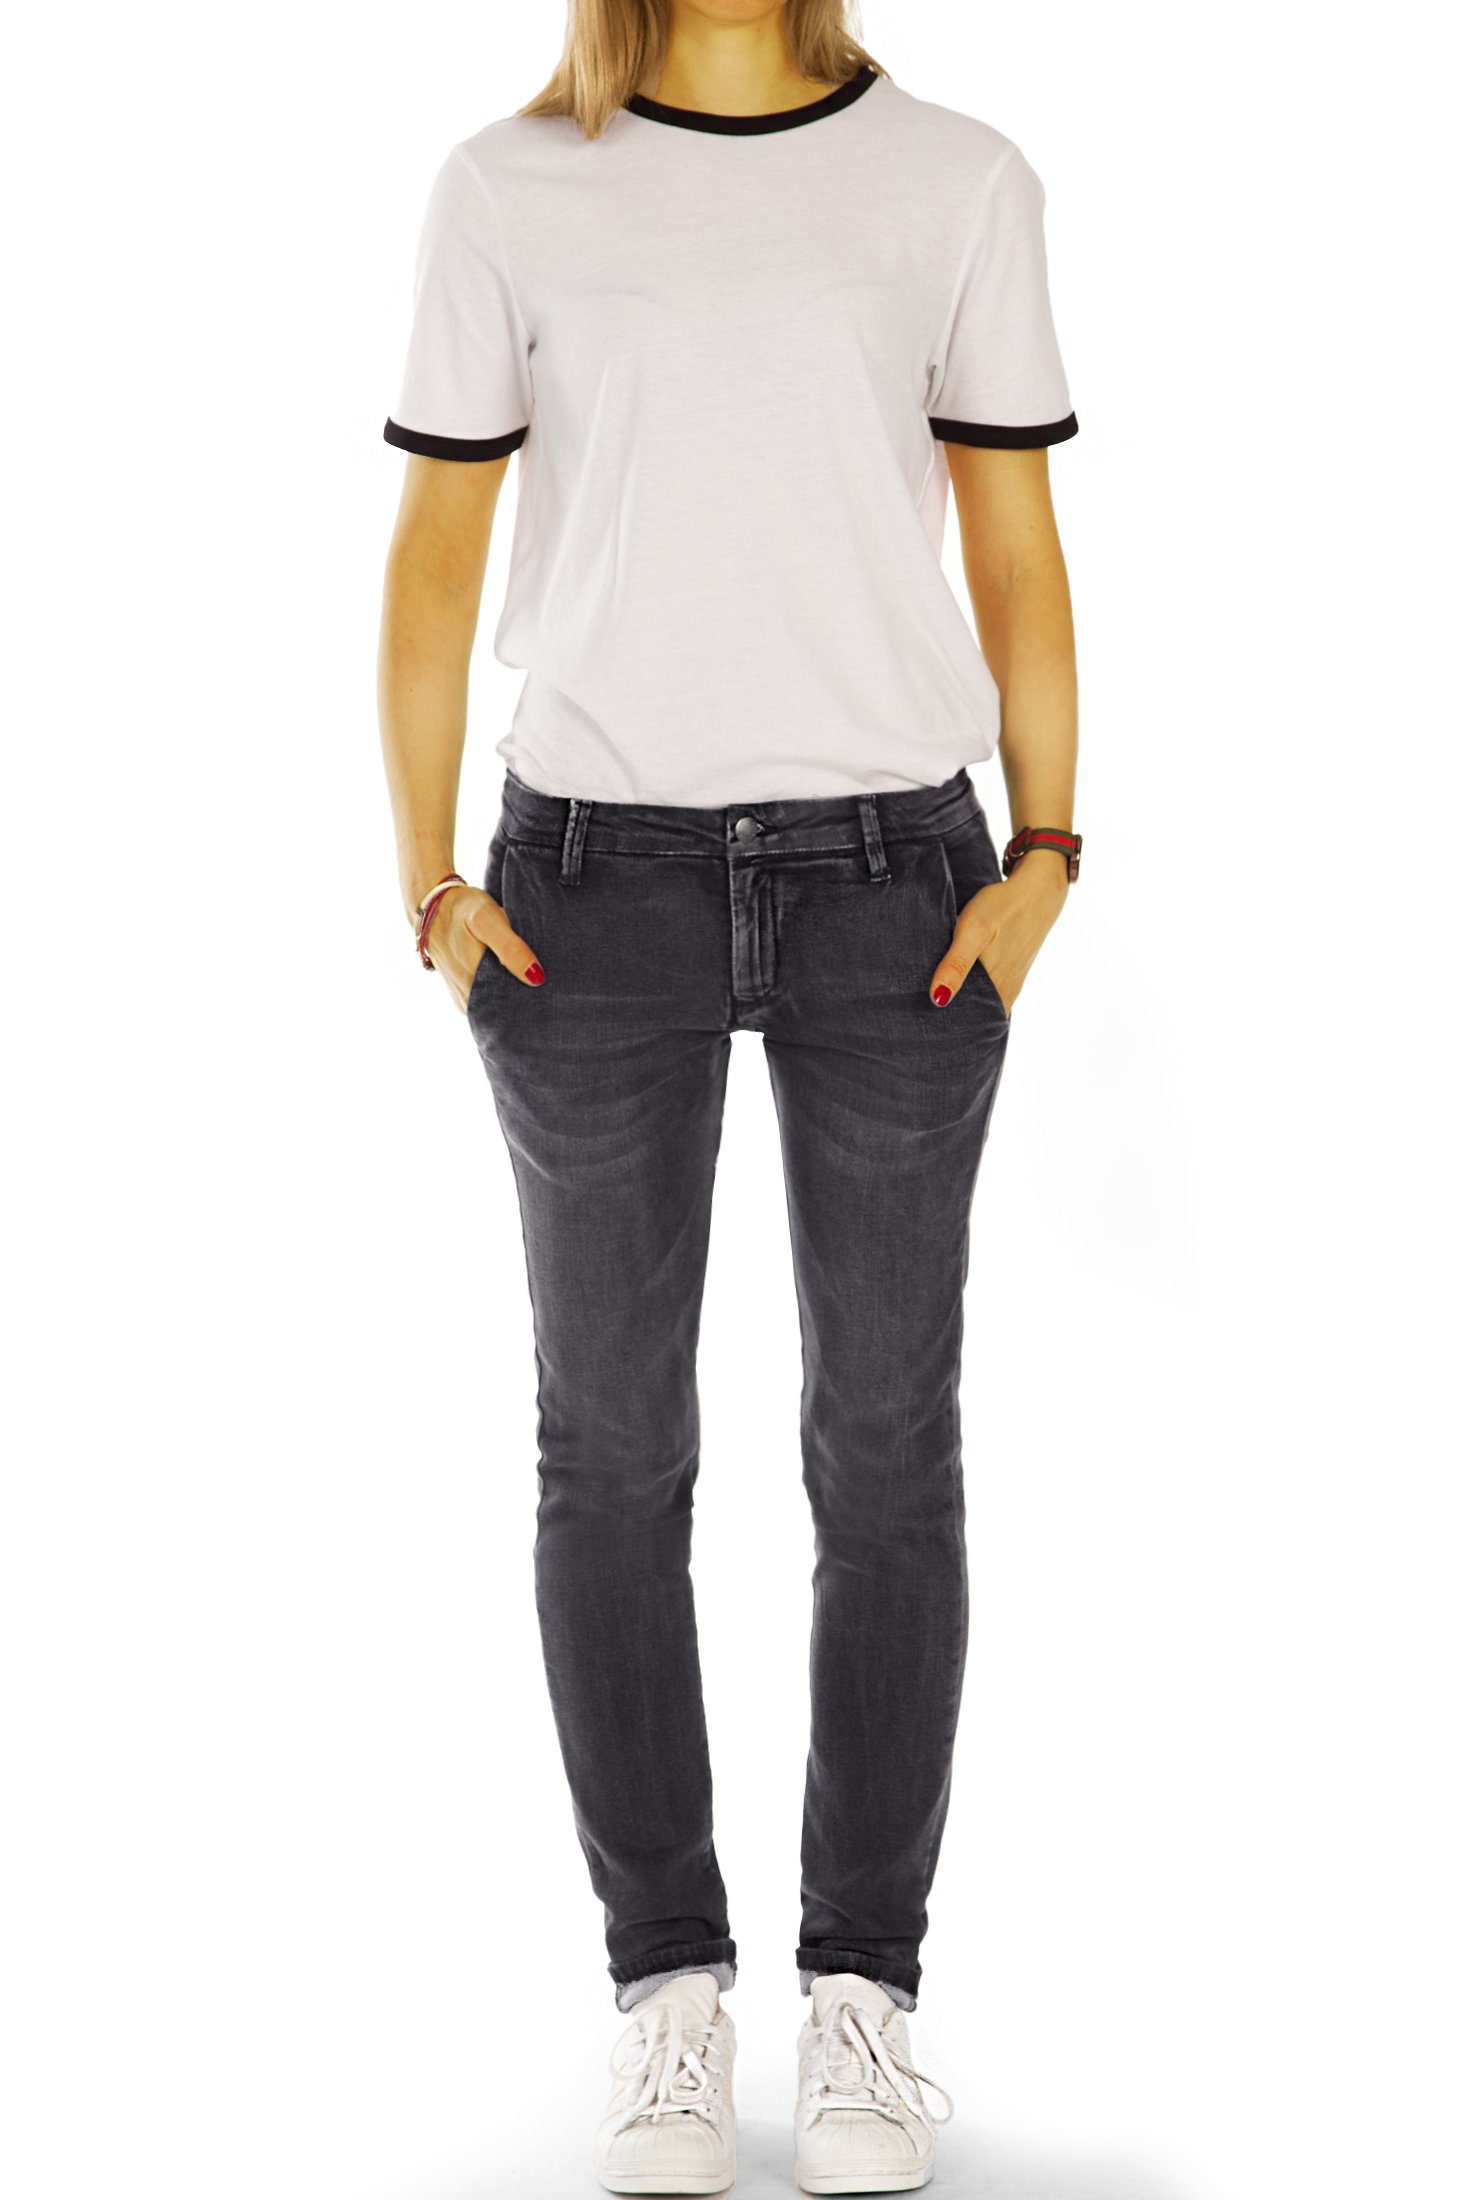 Damen - Hose Stretch, styled Hüftige be - j10m-3 Chinohose mit in grau Hüfthosen Unifarben Stoffhosen Chino